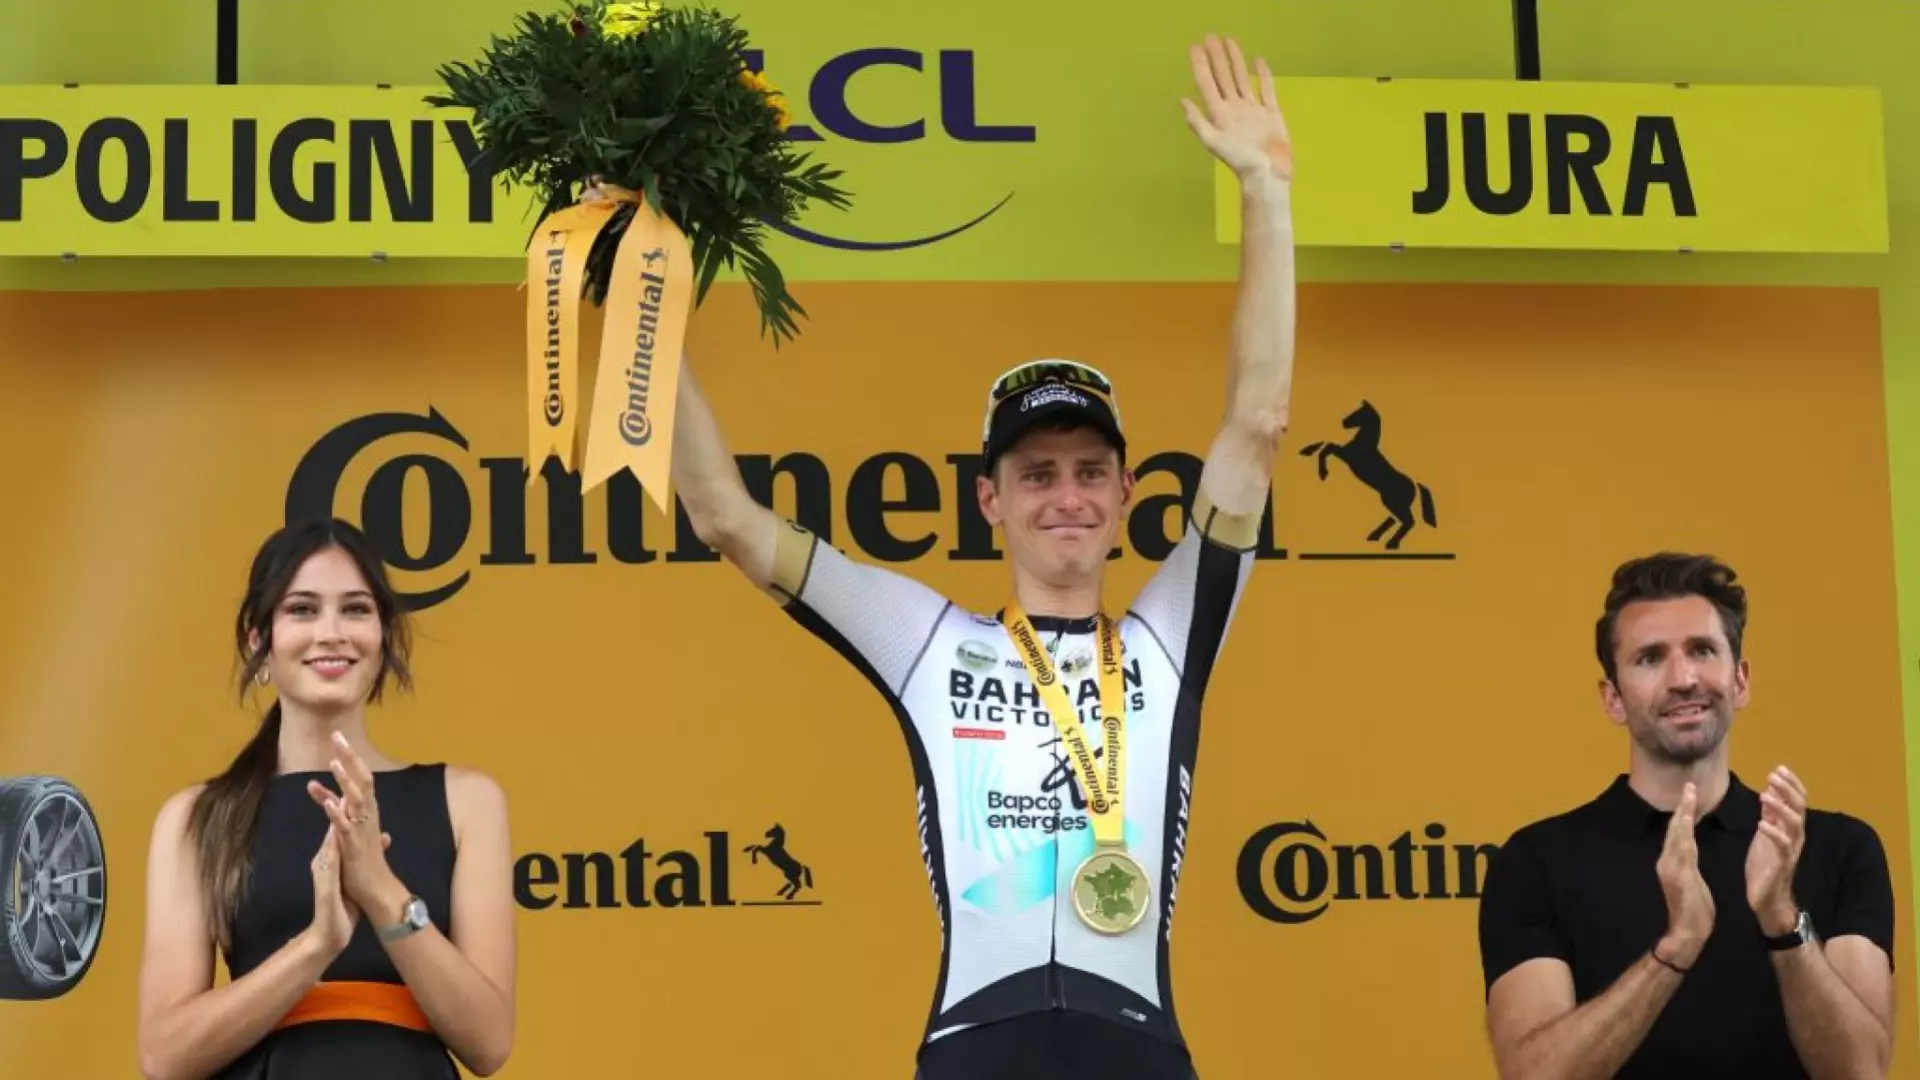 Tour de France: Mohoric trionfa a Poligny, Vingegaard ancora in giallo